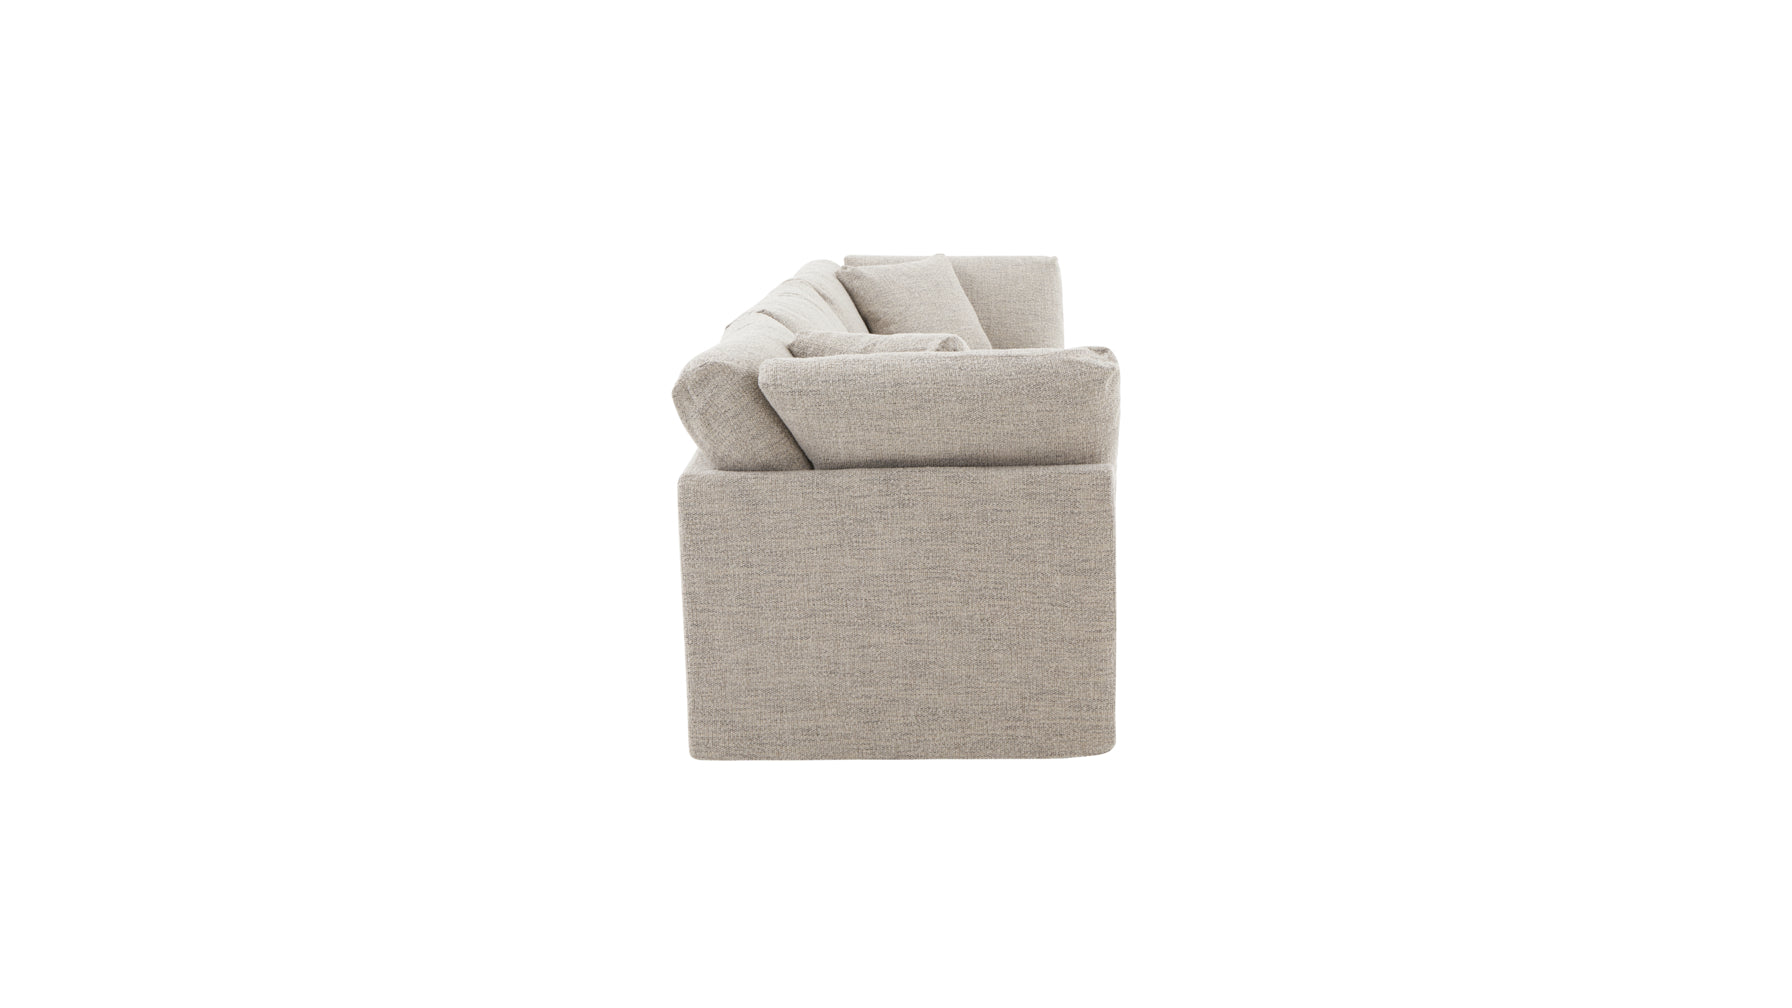 Get Together™ 3-Piece Modular Sofa, Standard, Oatmeal - Image 6